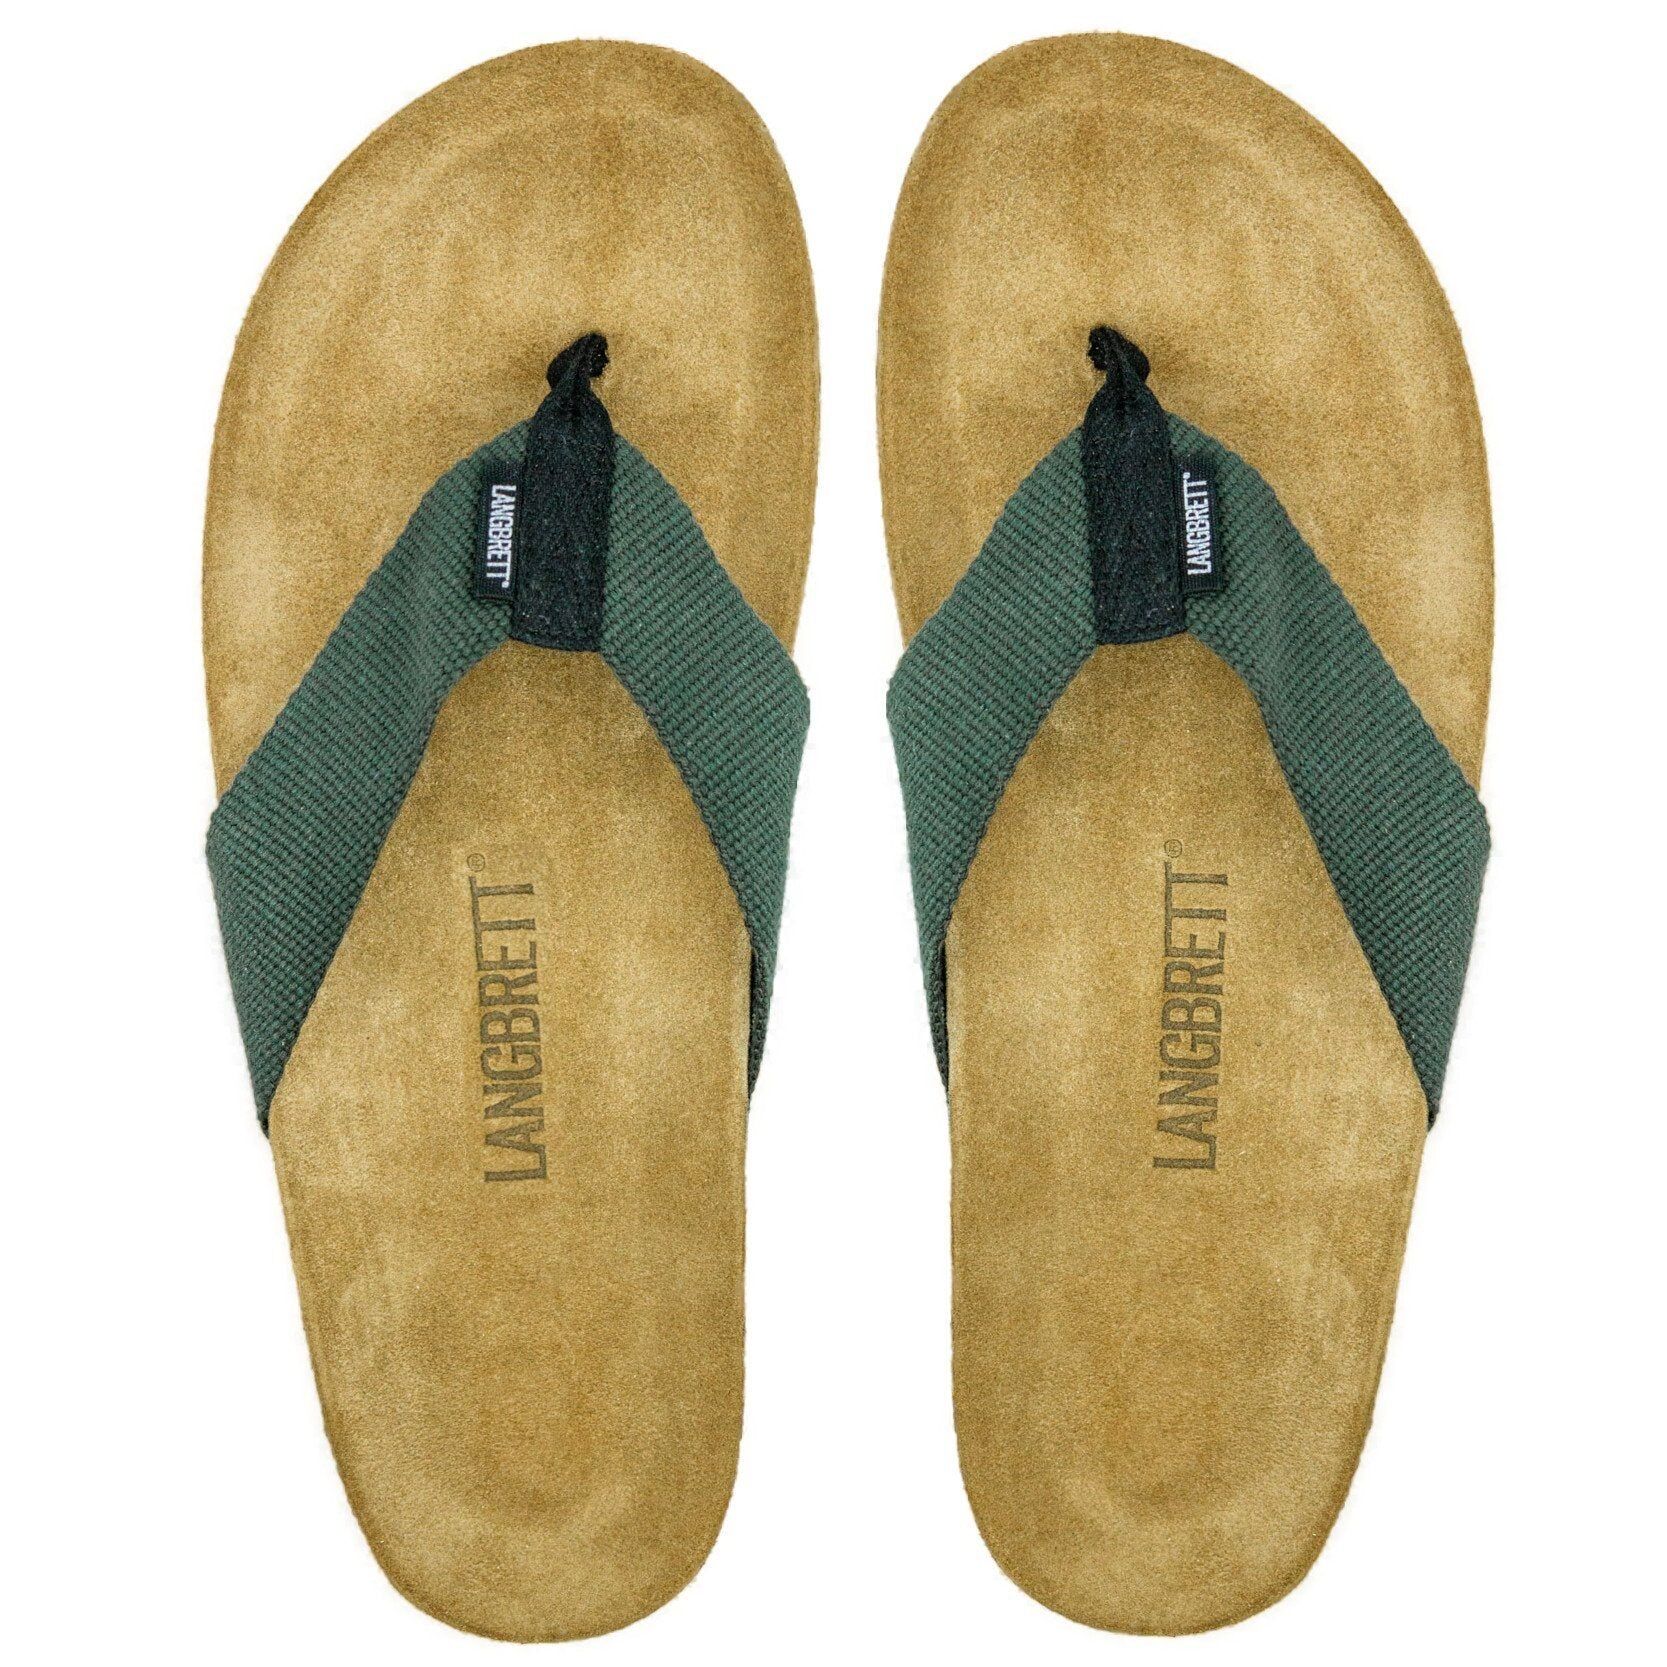 LANGBRETT GUR Ecological sandals, Green / 43